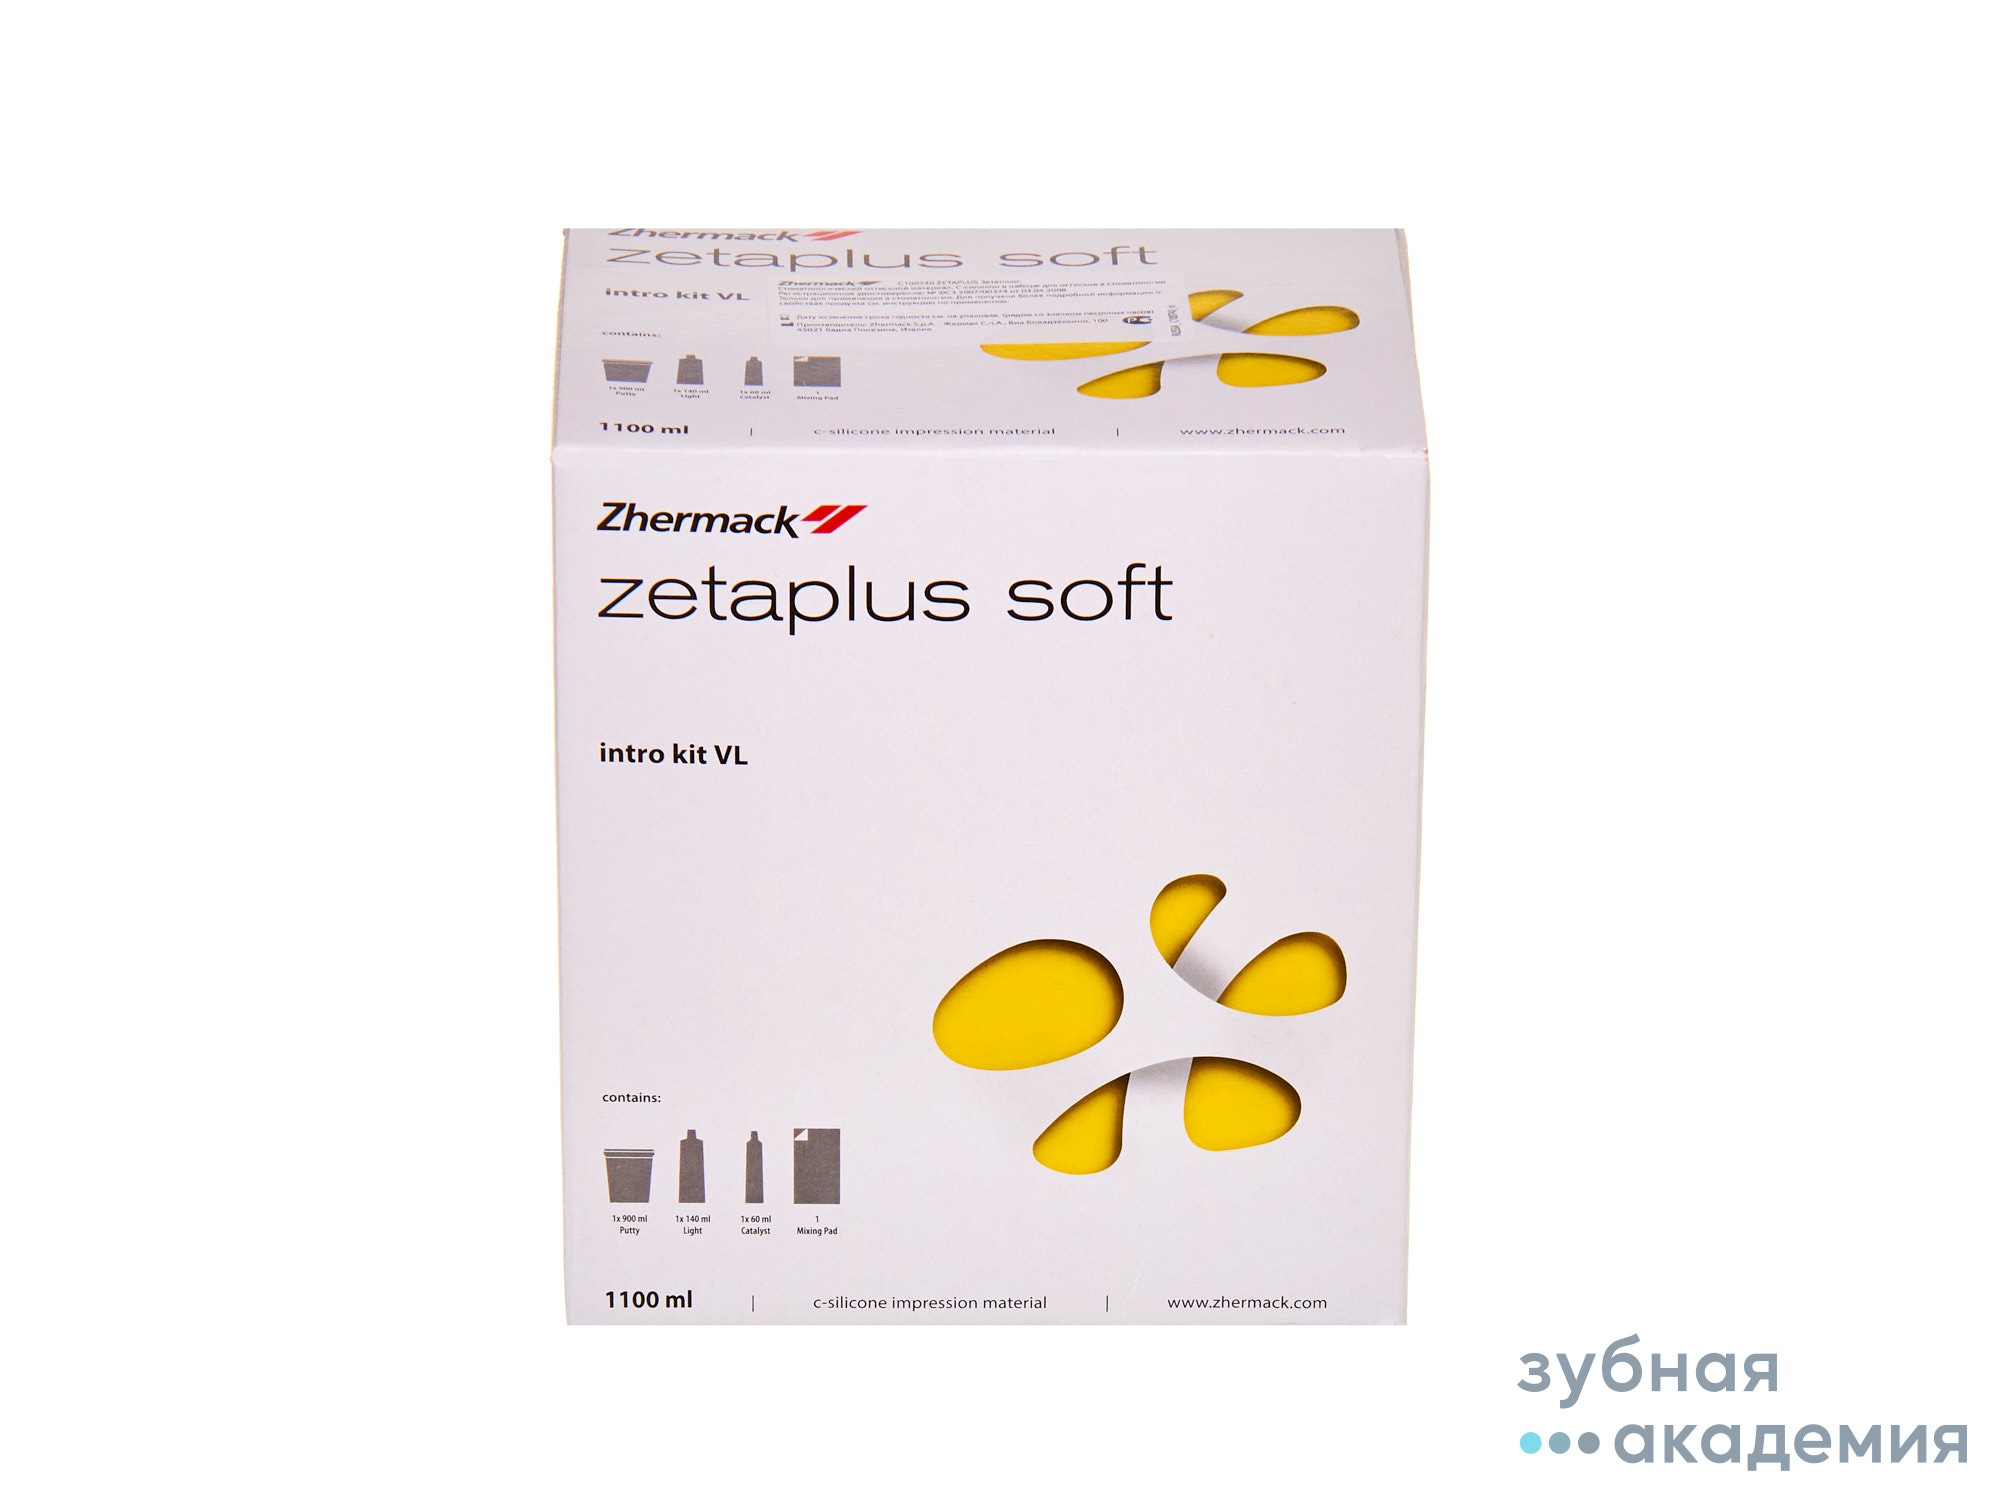 ZetaPlus SOFT VL Intro Kit Зета плюс Софт набор: 900мл+140мл + 60мл,желтый Zhermack/ Италия